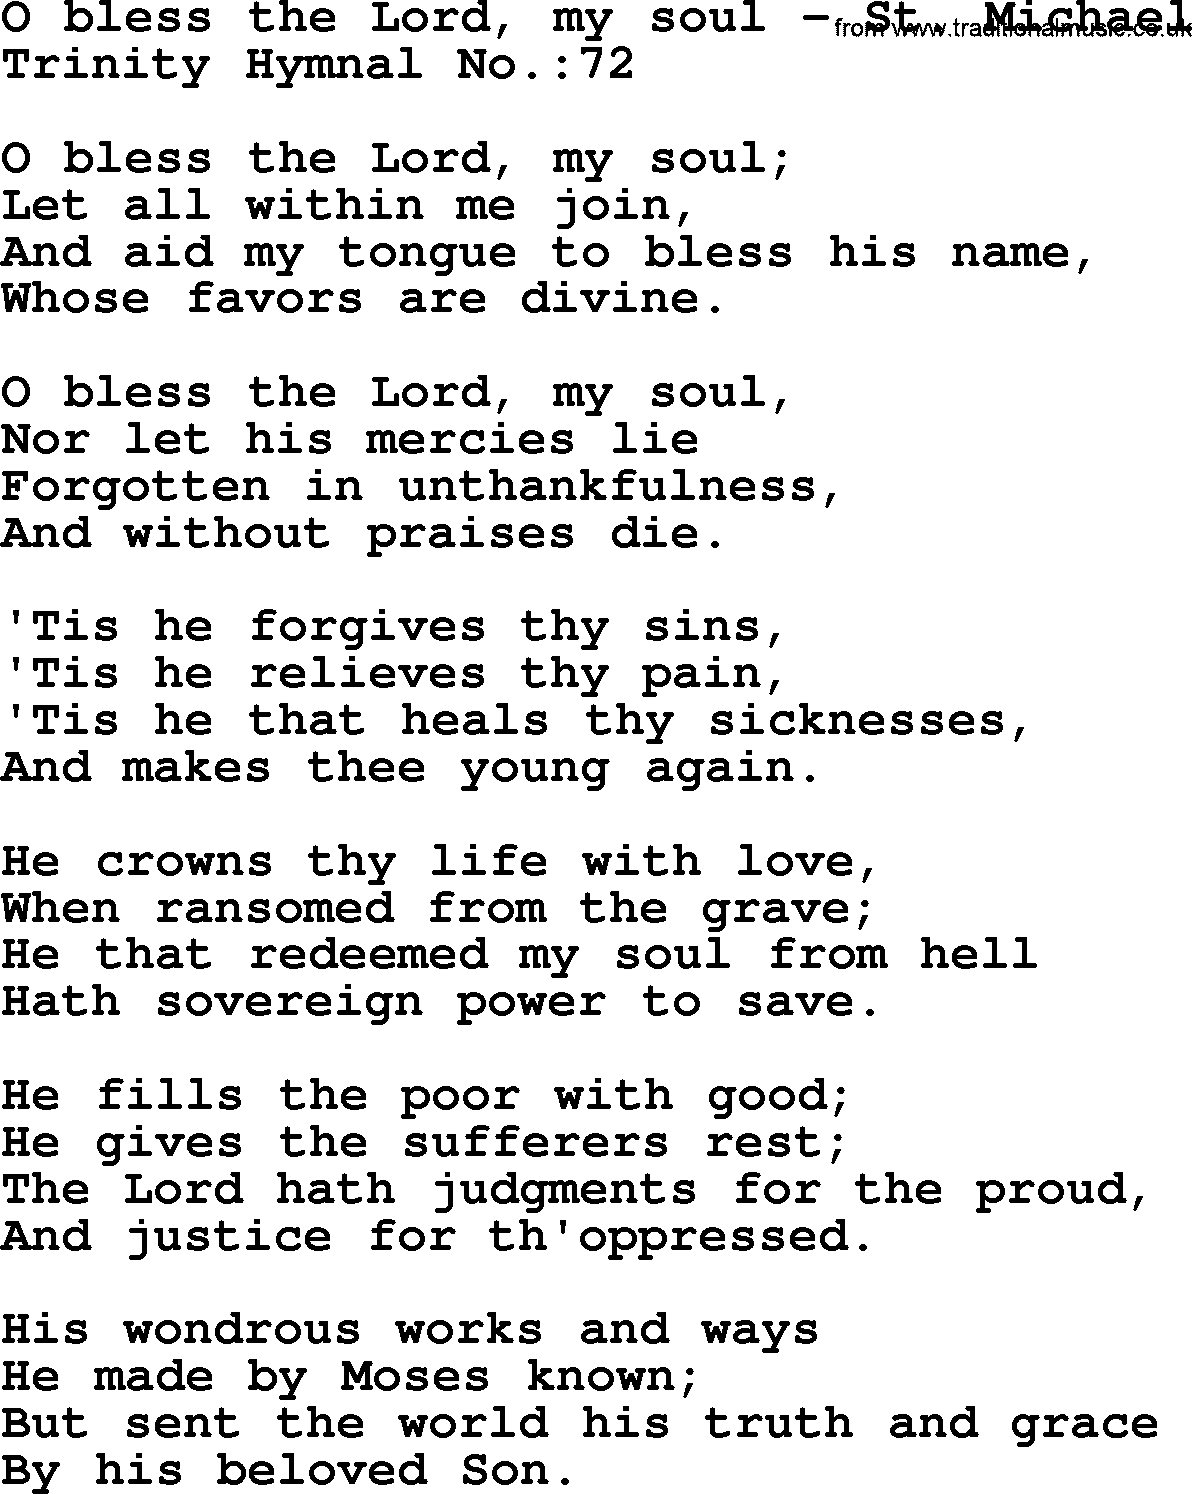 Trinity Hymnal Hymn: O Bless The Lord, My Soul--St. Michael - lyrics